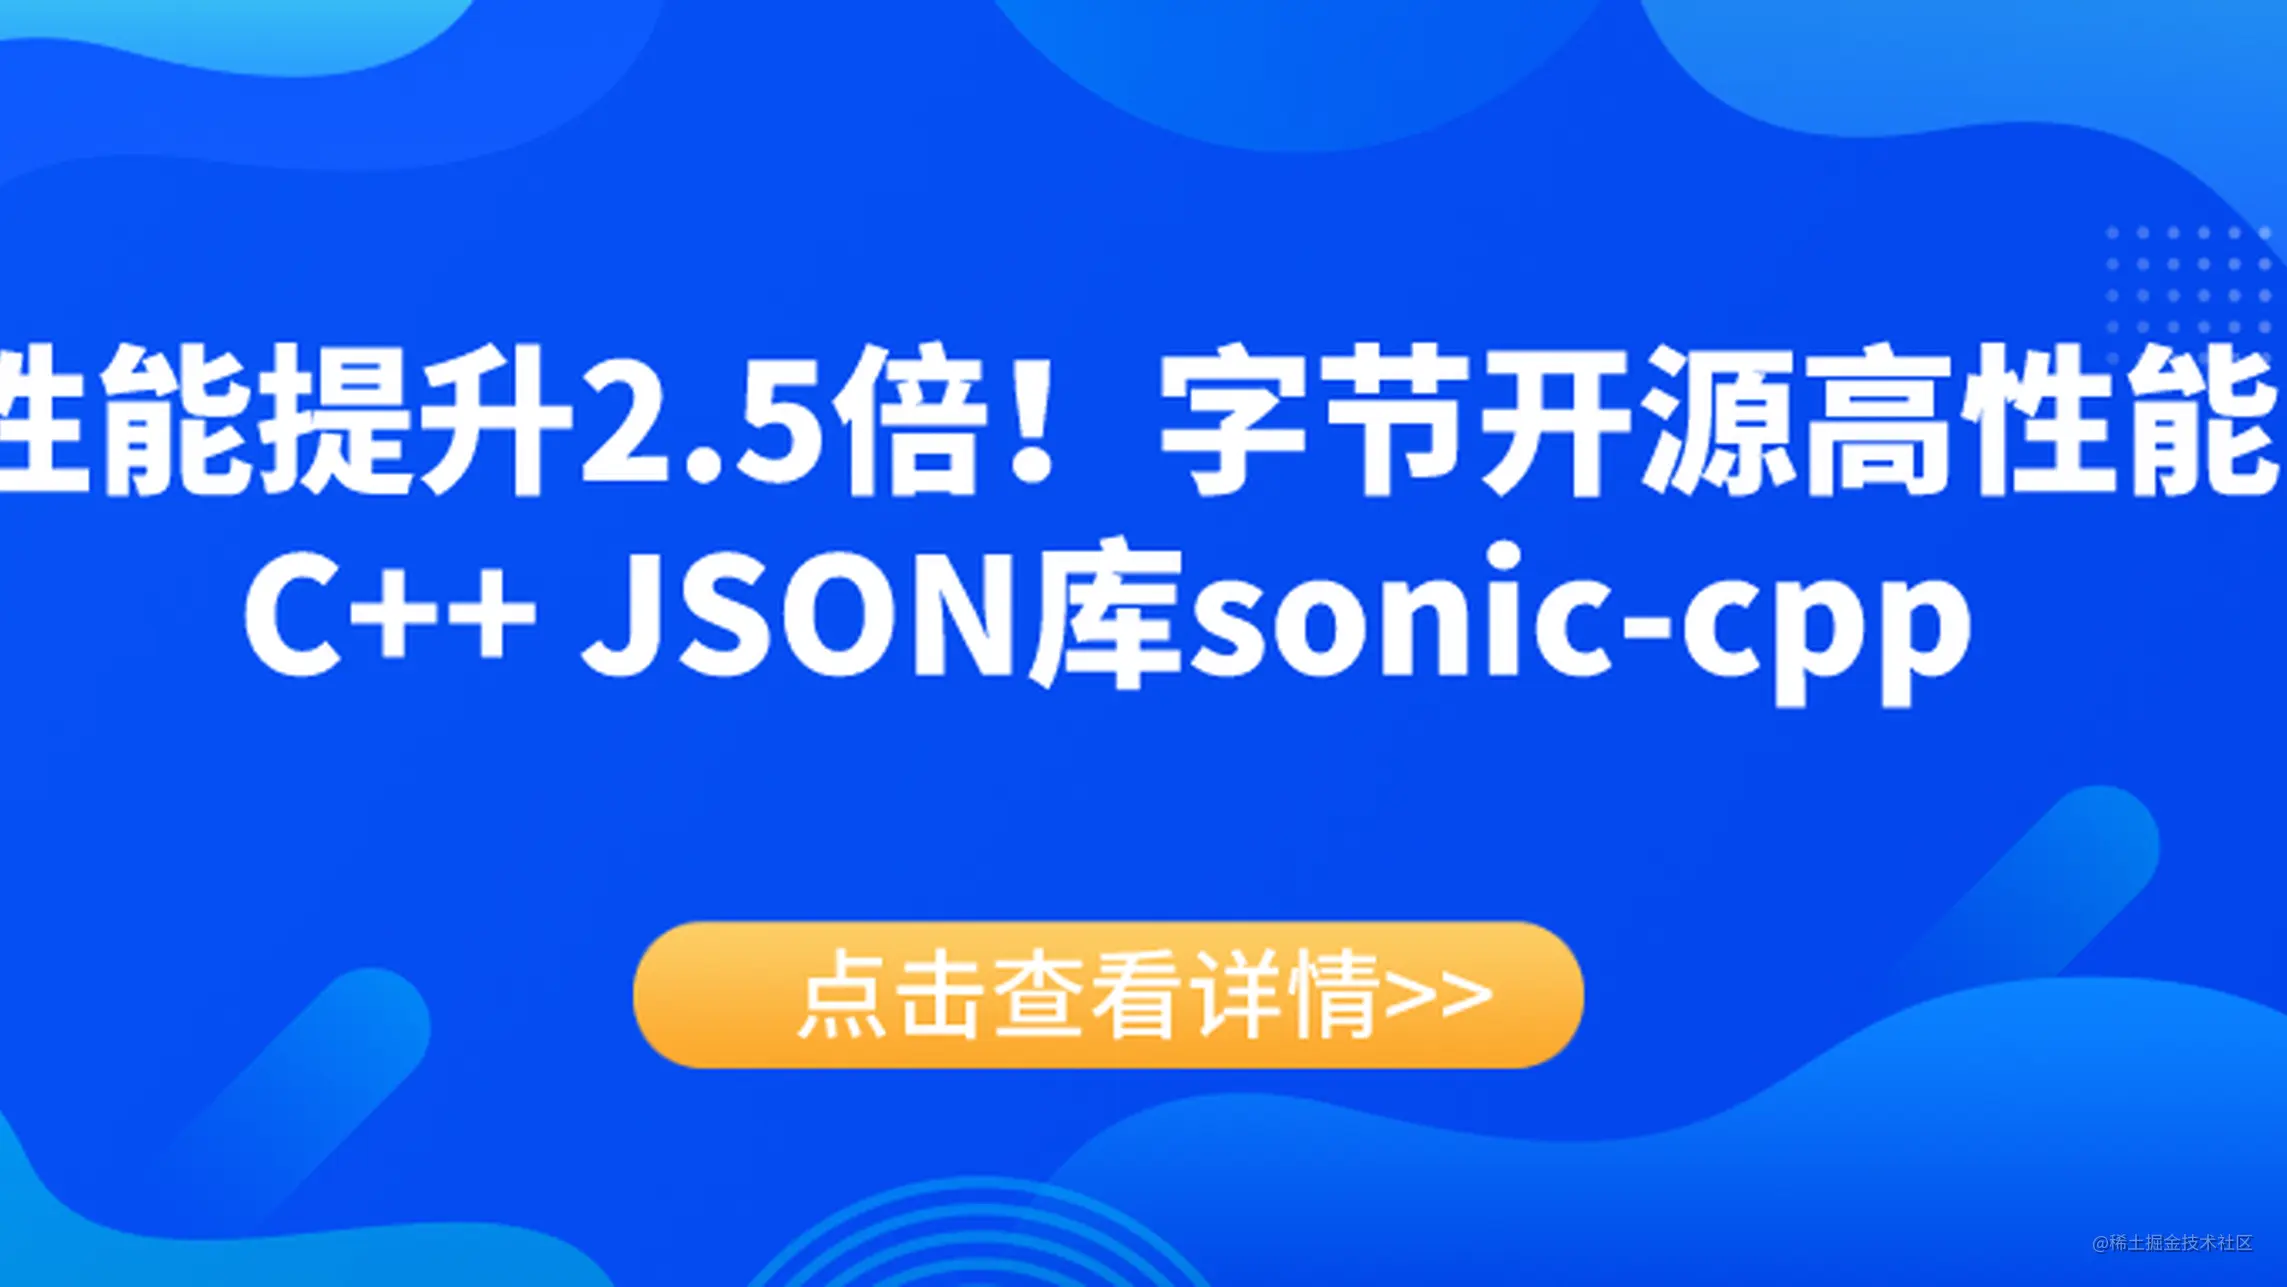 性能提升 2.5 倍！字节开源高性能 C++ JSON 库 sonic-cpp